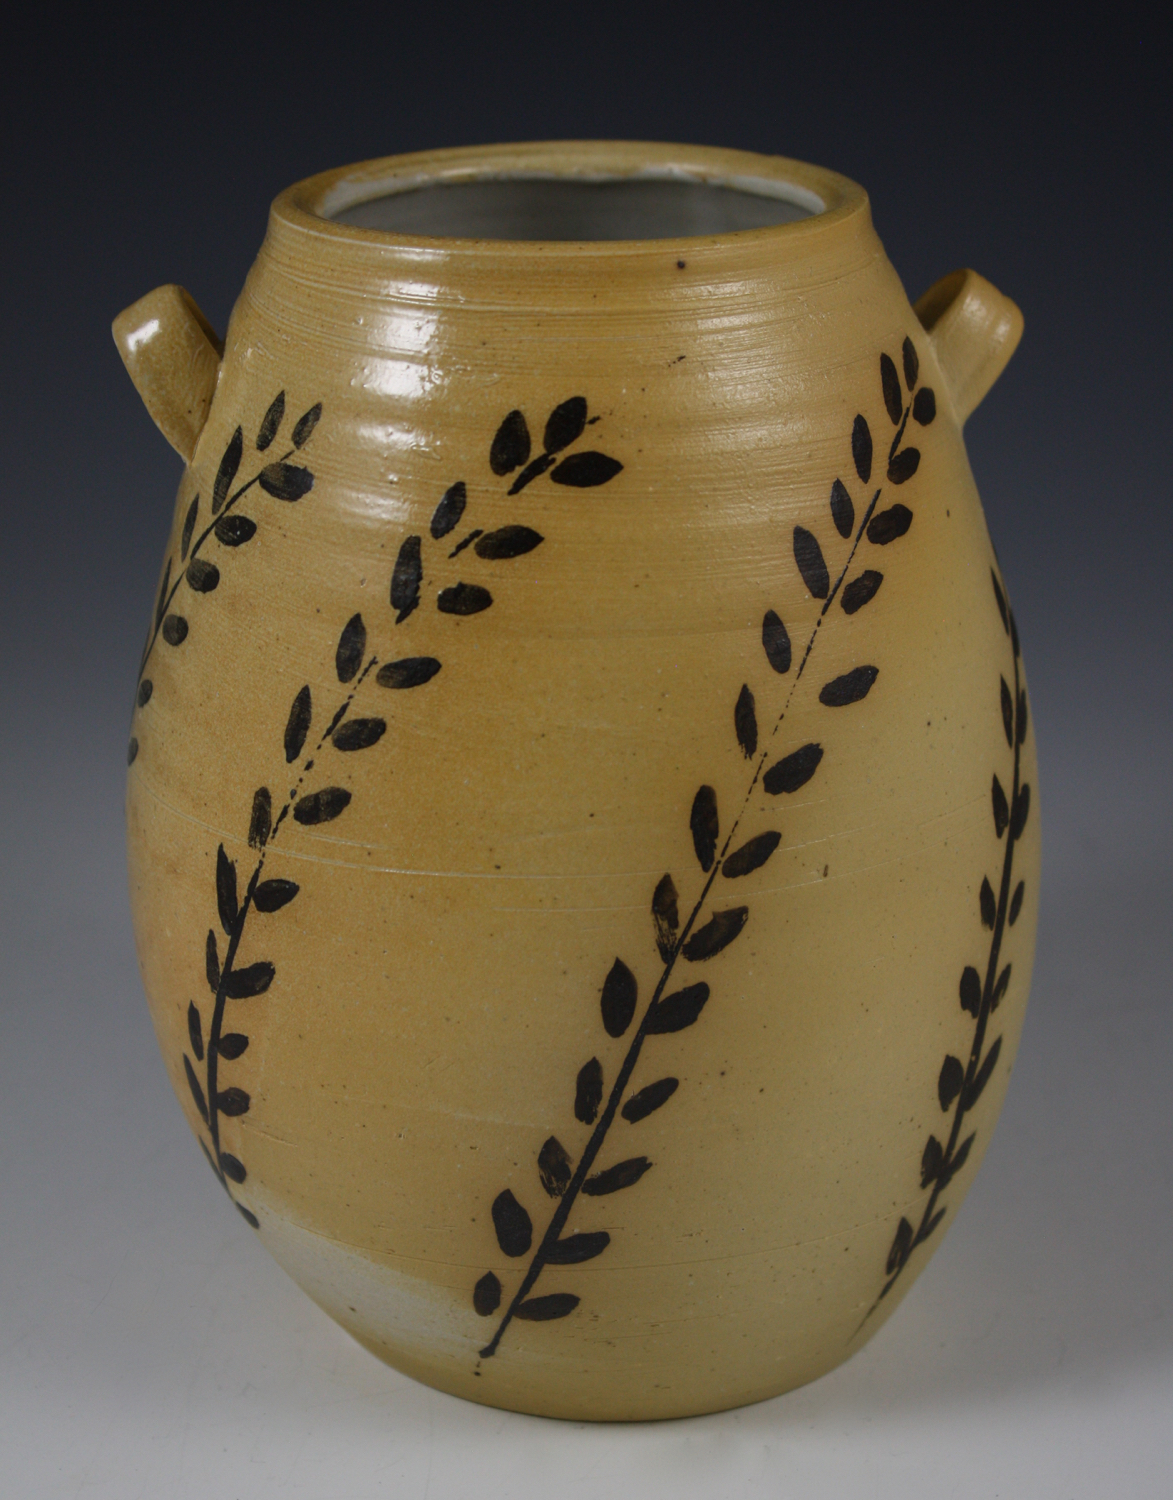 Egg-shaped Vase with Wheat Design